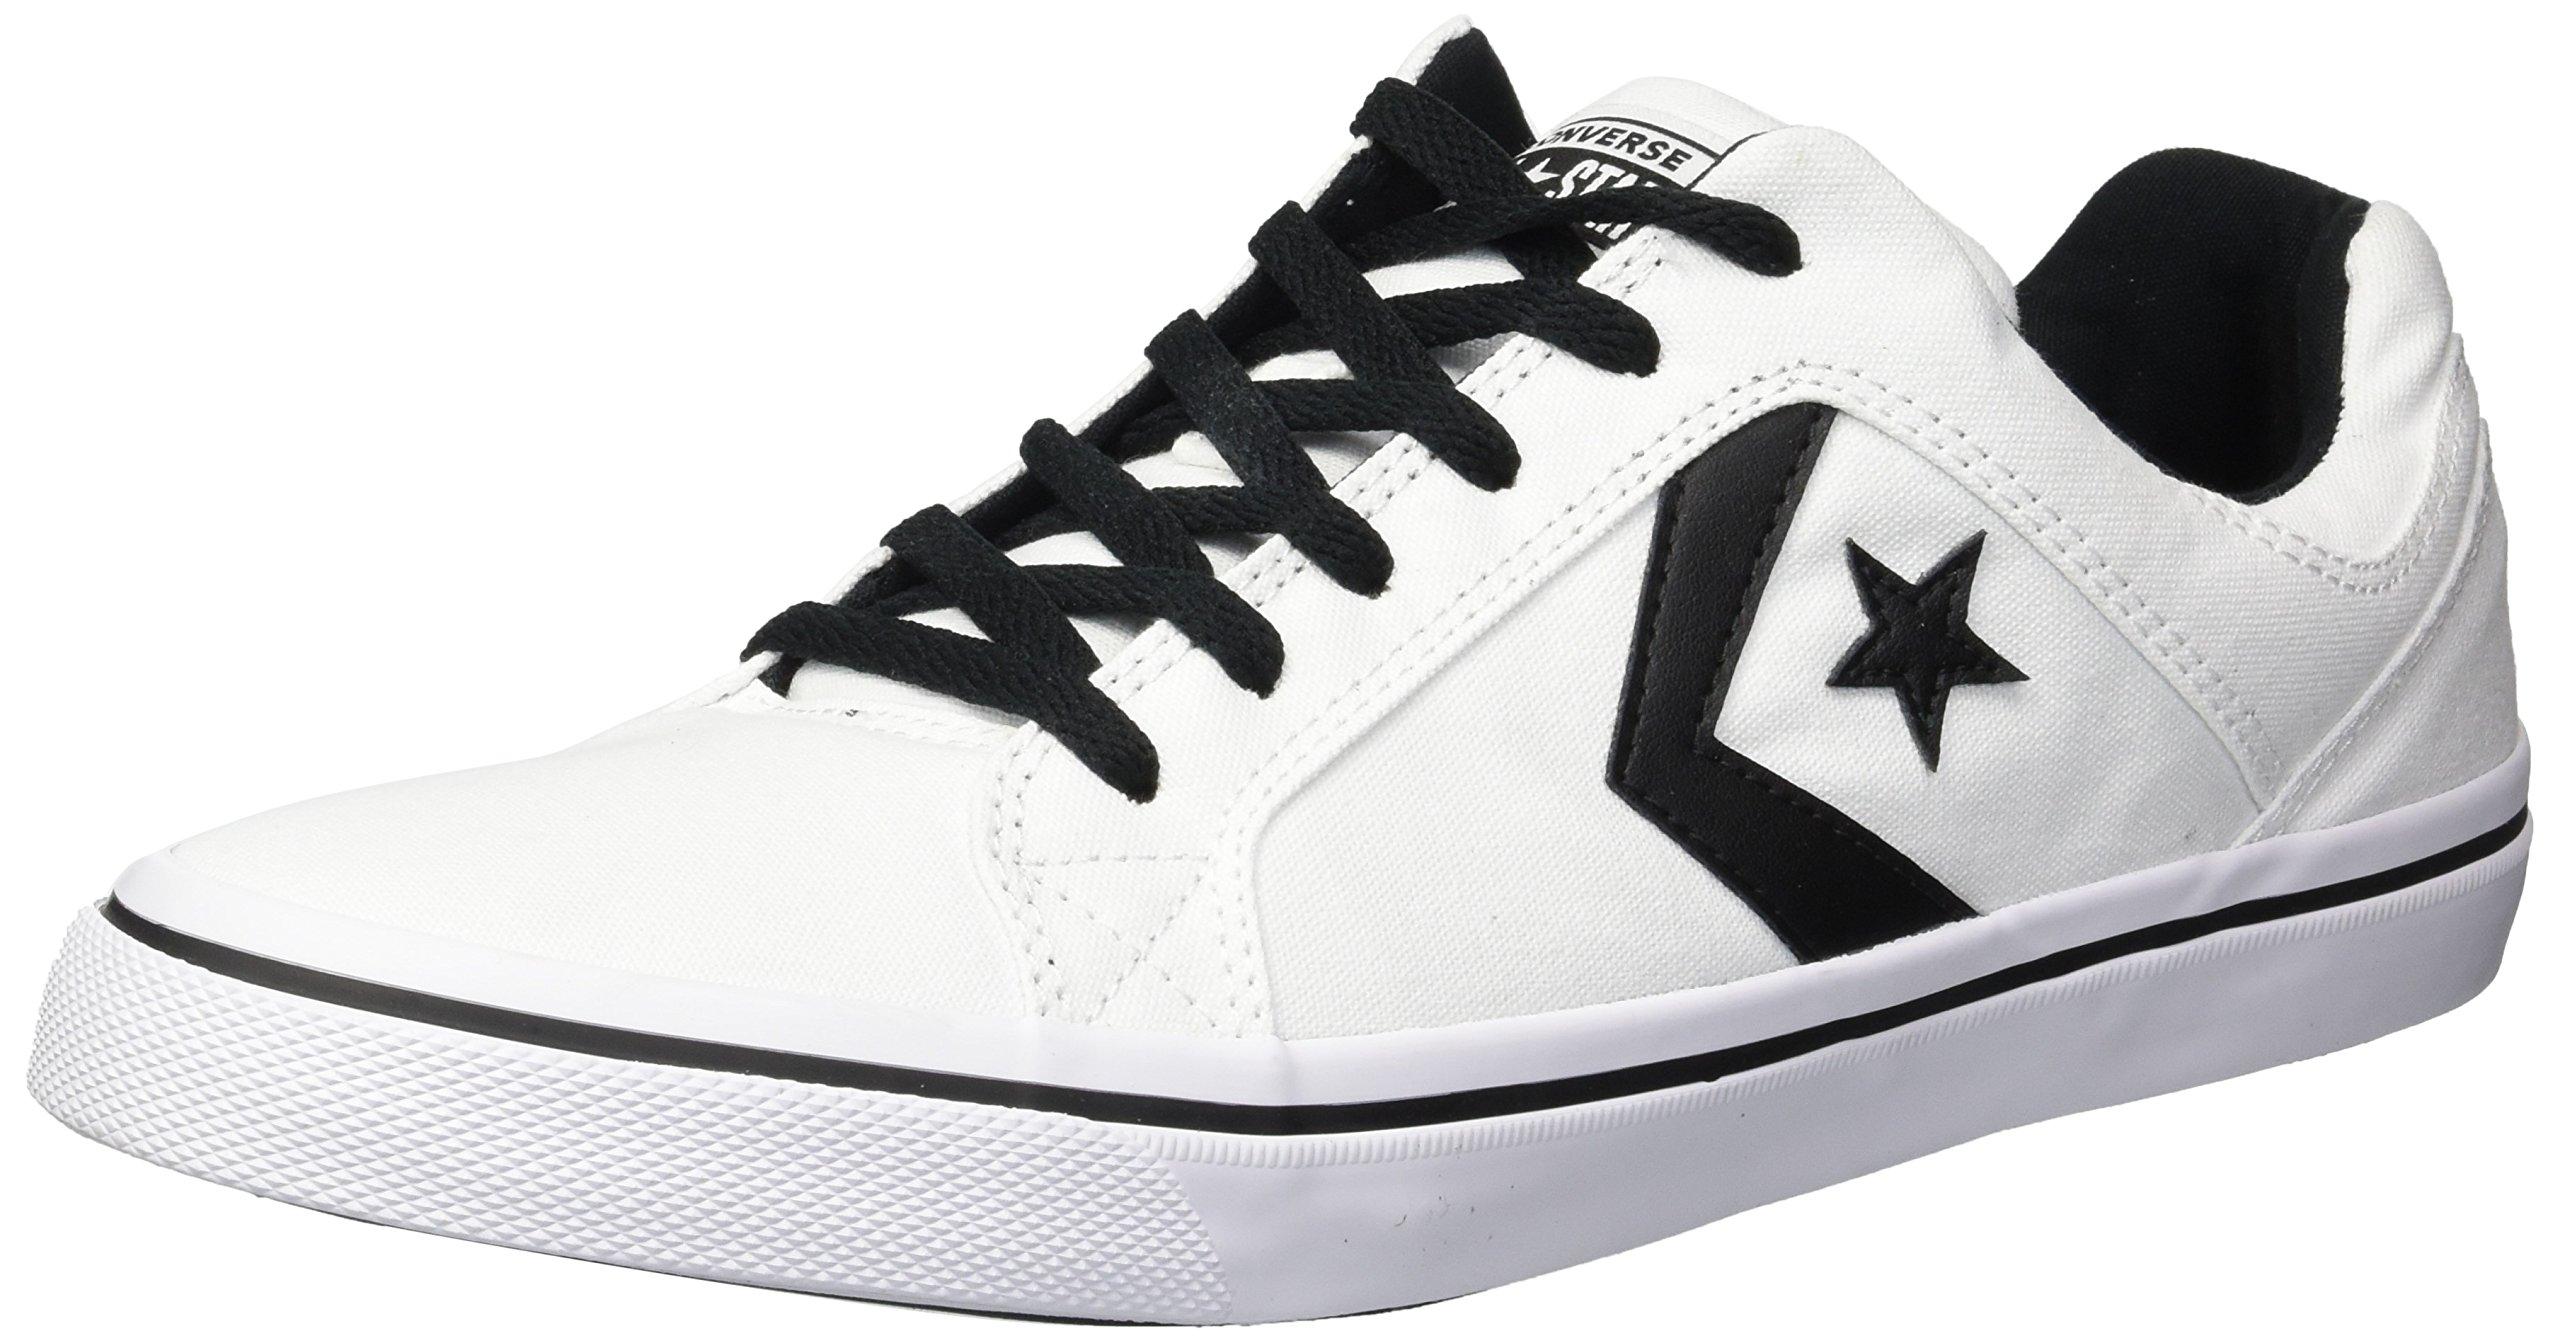 Converse El Distrito Canvas Low Top Sneaker in White/Black/White (White)  for Men - Save 5% - Lyst